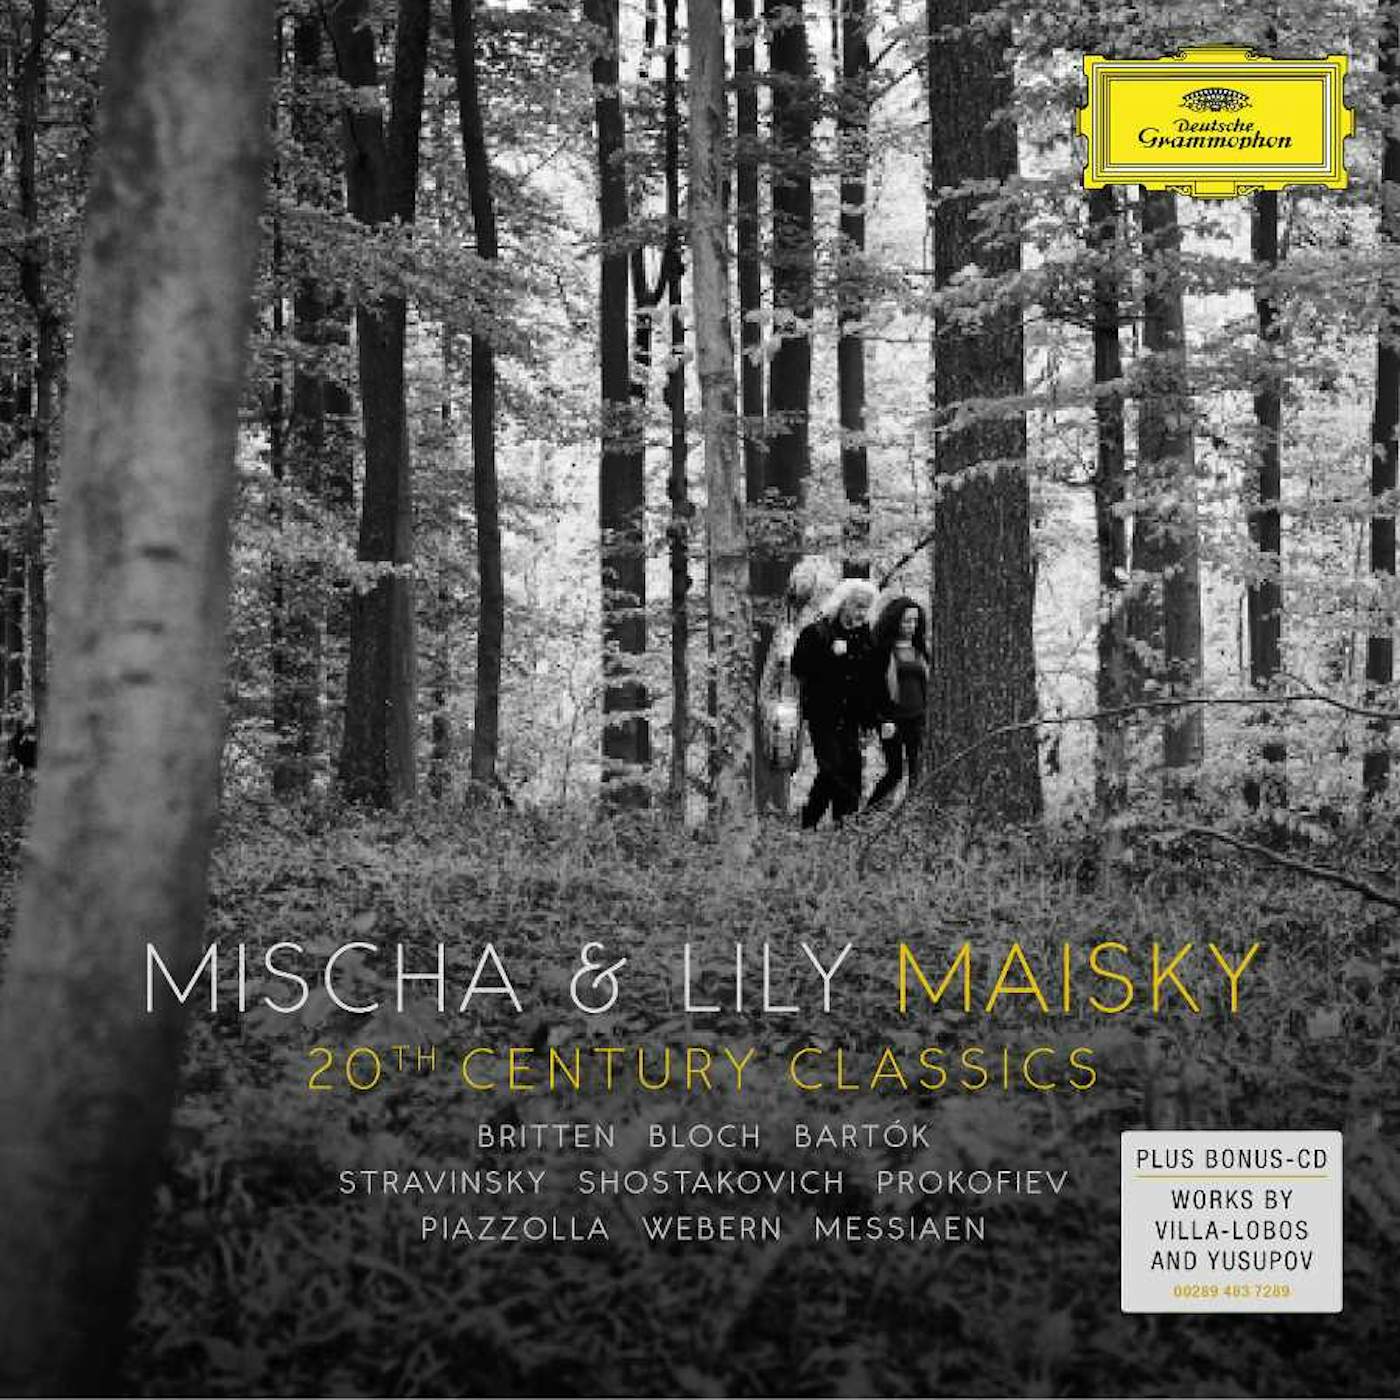 Mischa Maisky 20TH CENTURY CLASSICS CD